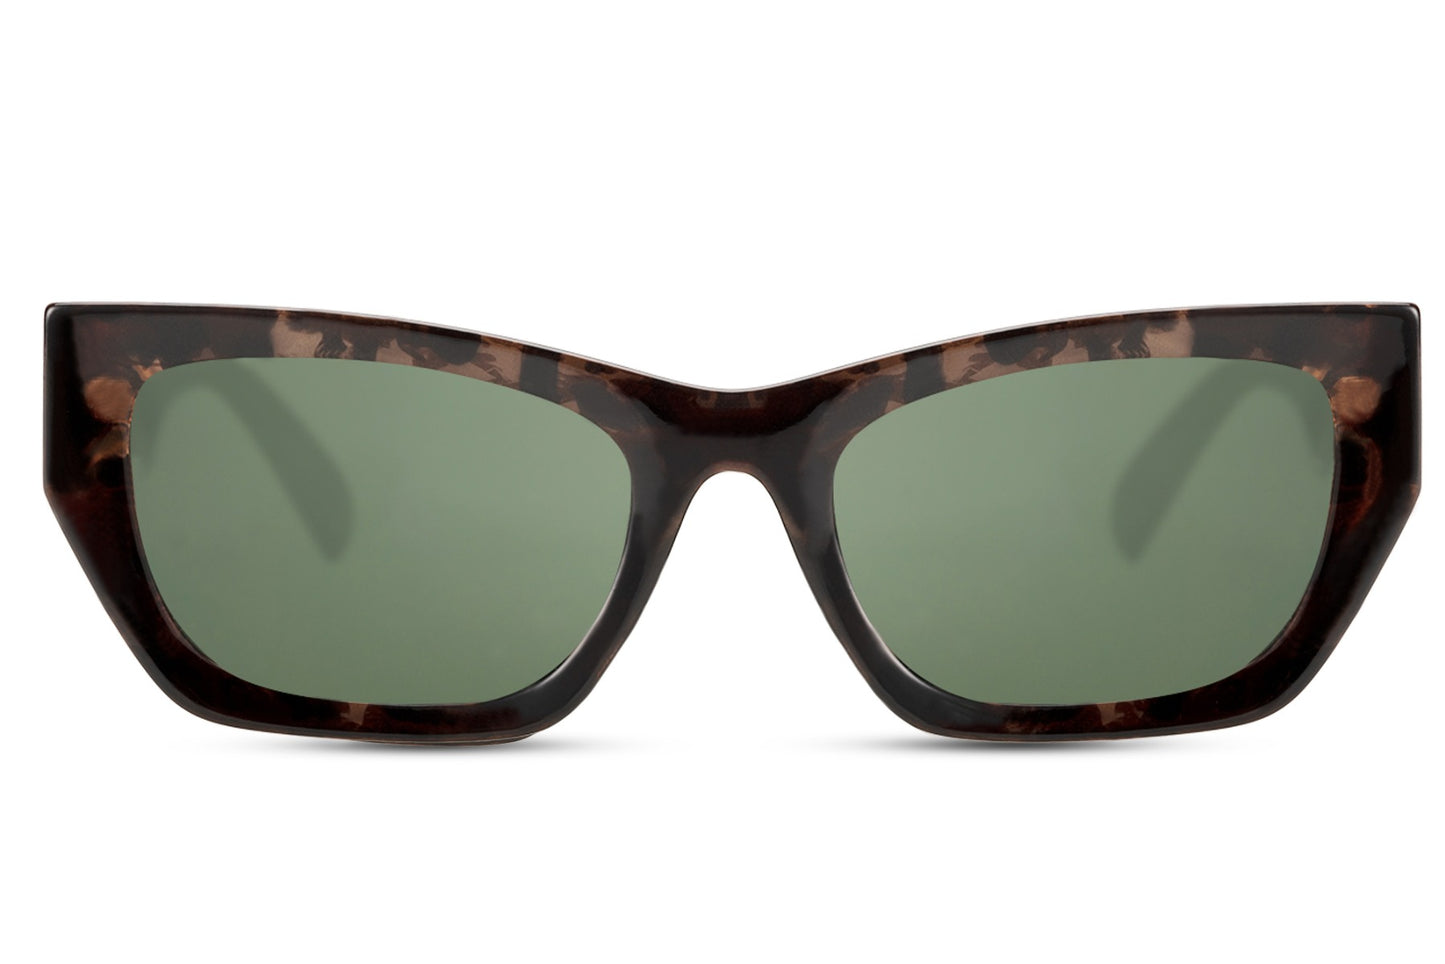 Geometric Cateye Sunglasses Collection